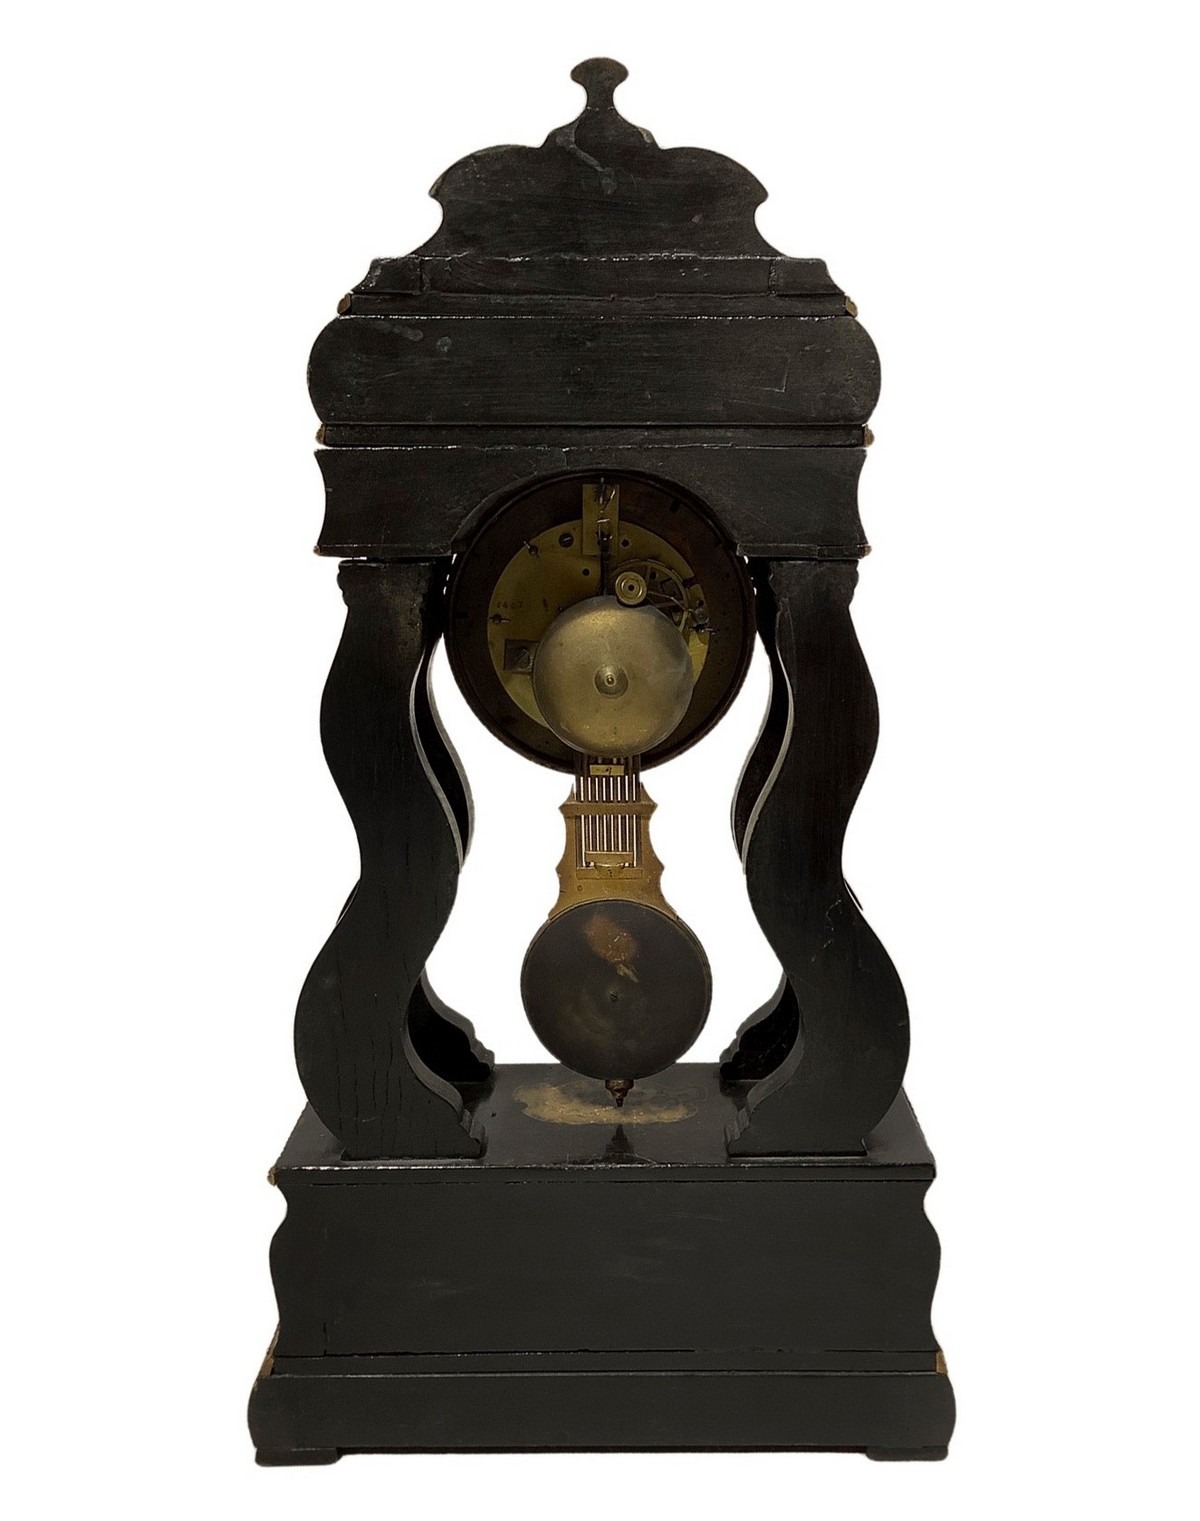 Boulle style pendulum table clock, nineteenth century - Image 4 of 5